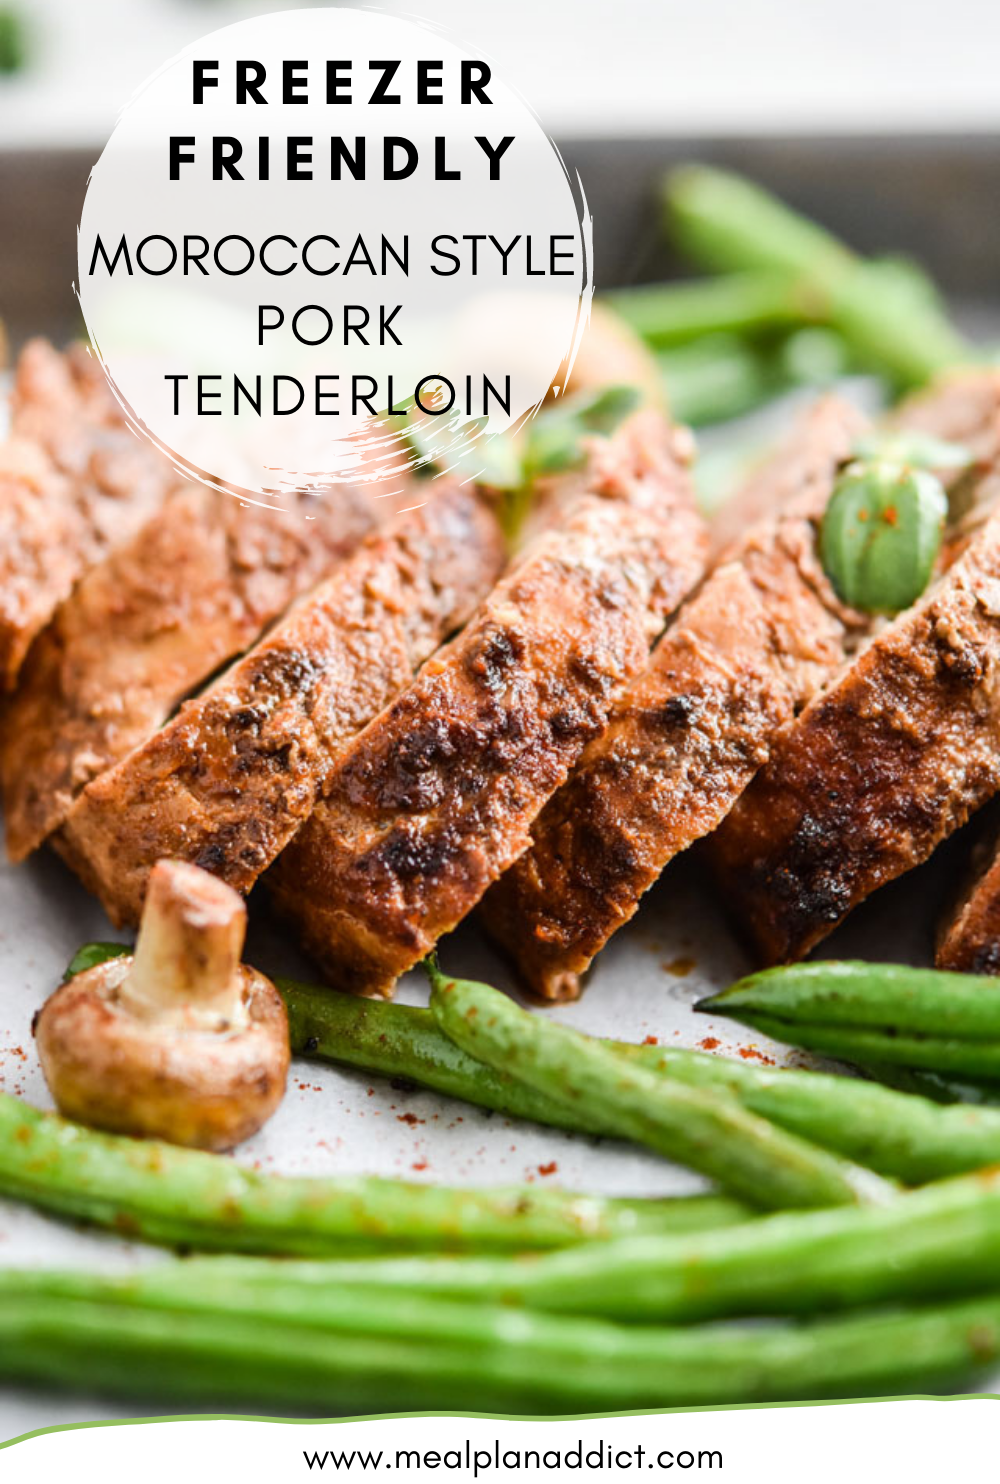 Freezer Friendly Moroccan Style Pork Tenderloin